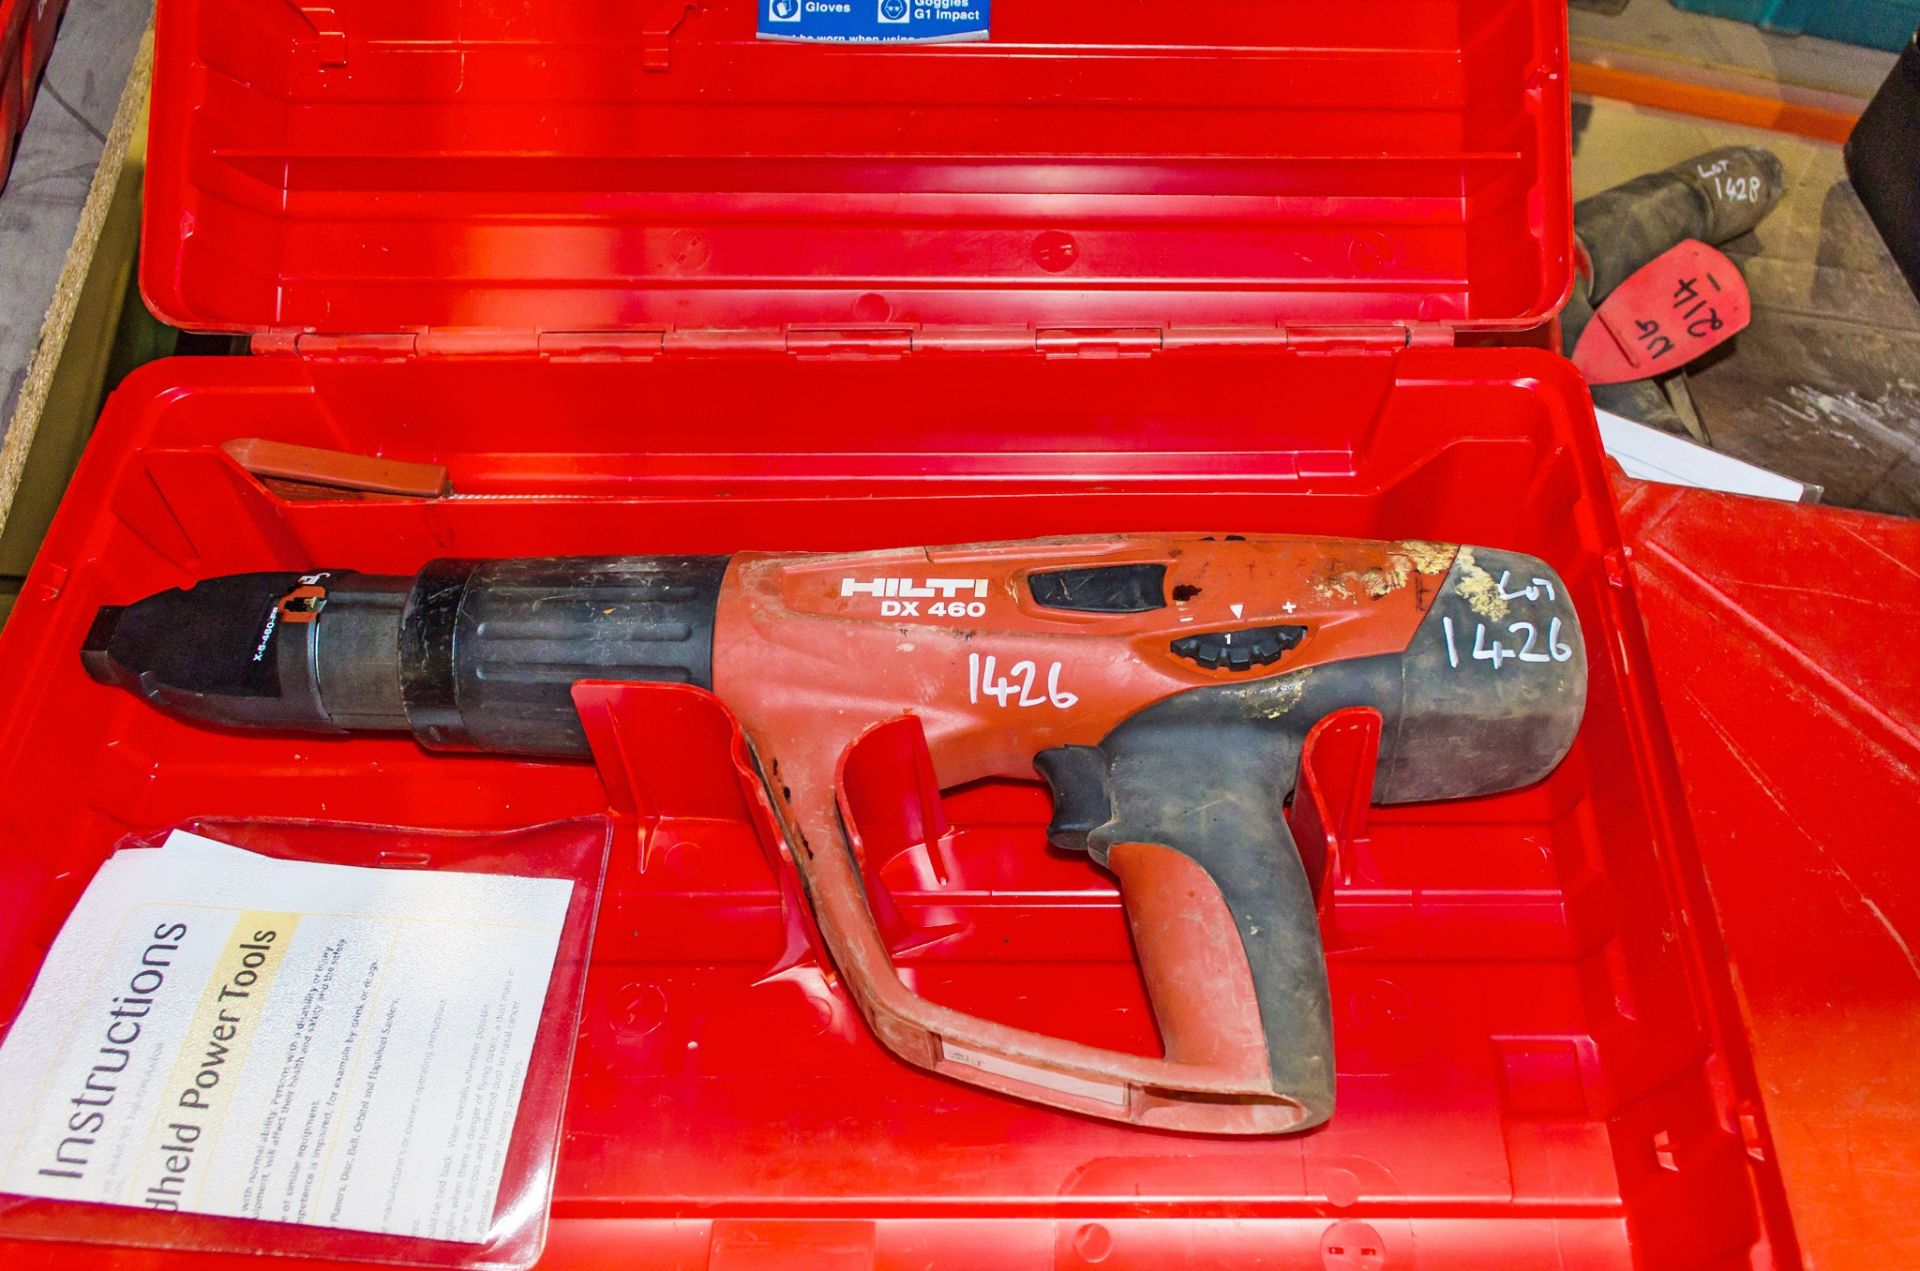 Hilti DX460 nail gun c/w carry case DX490